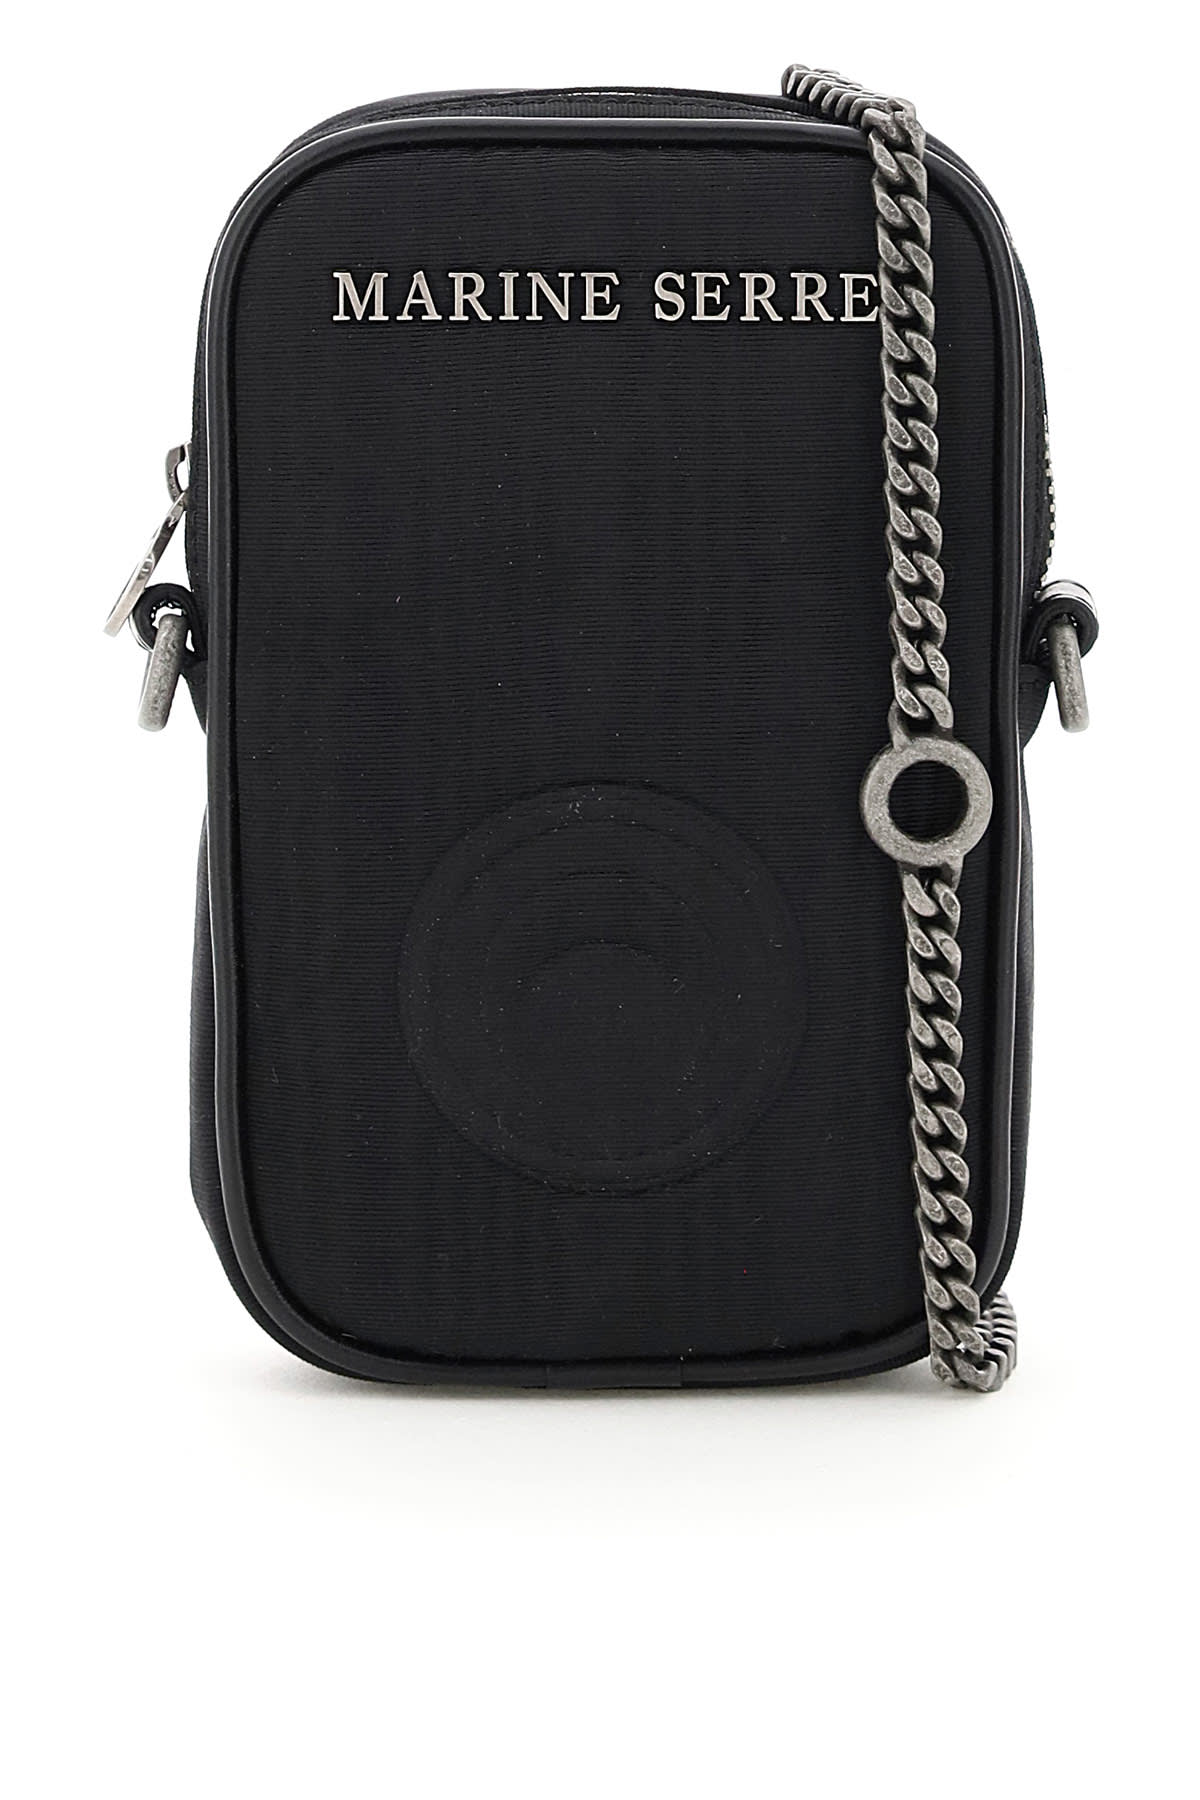 Marine Serre One Pocket Phone Case Mini Bag